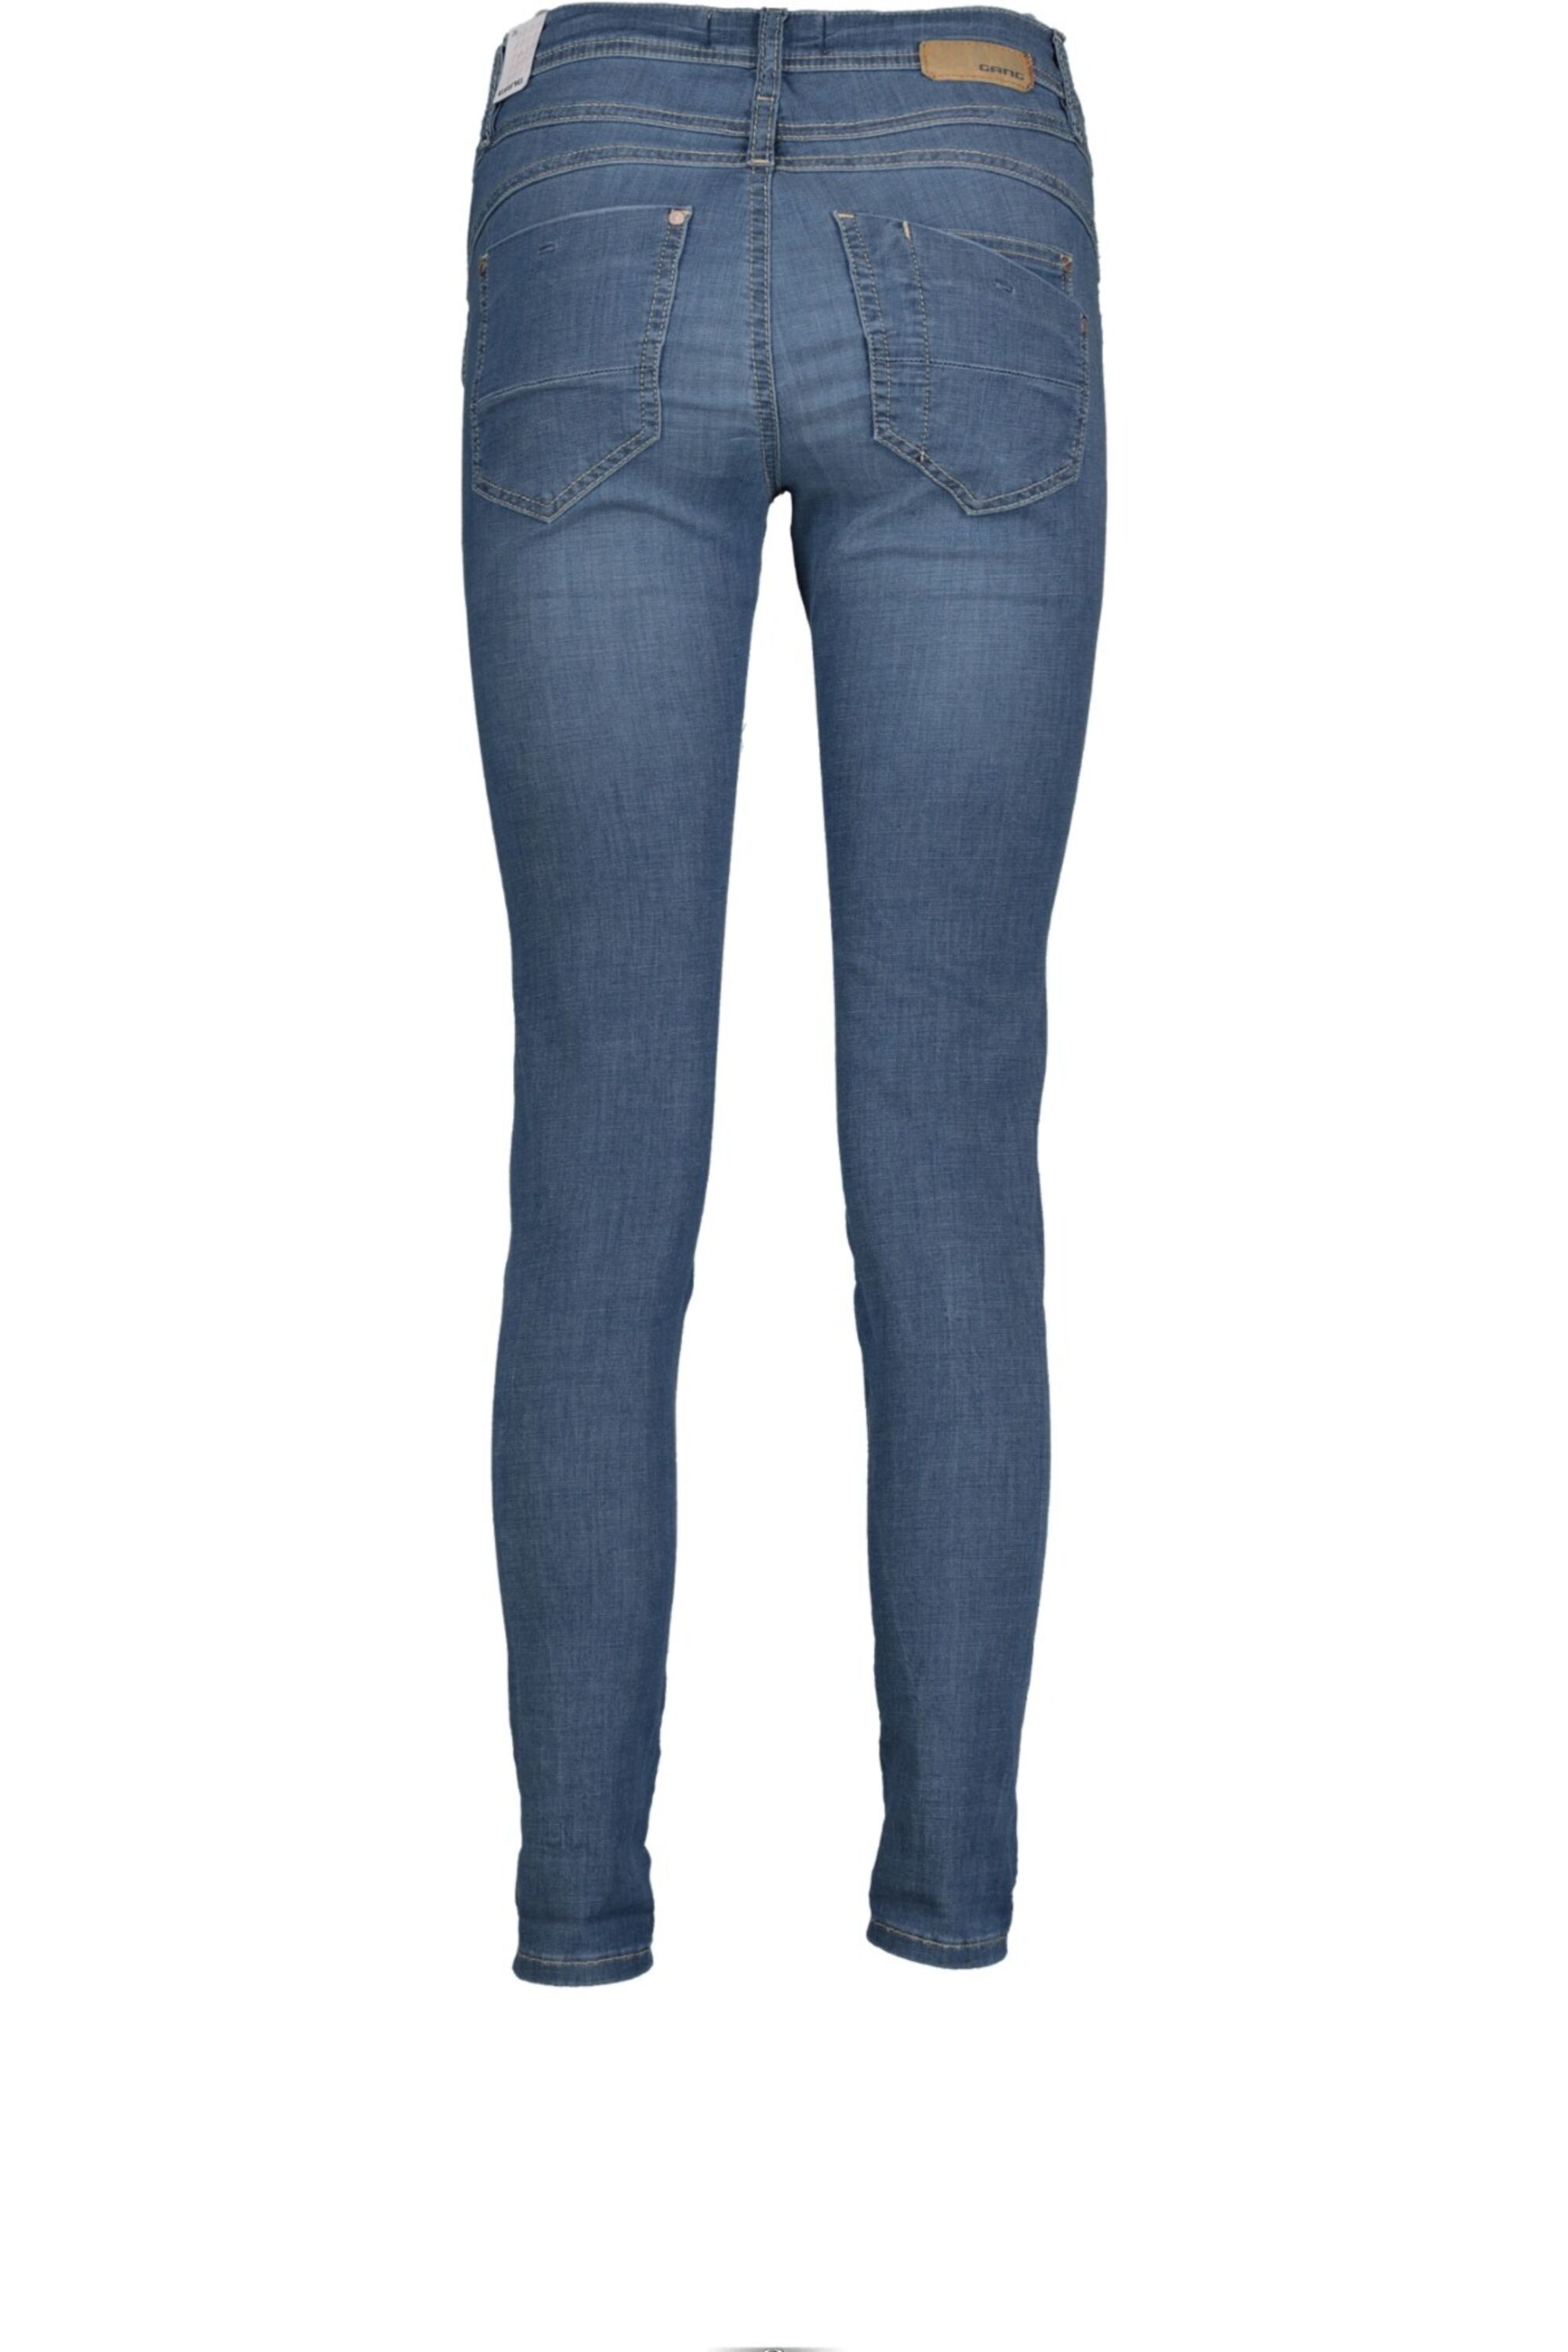 amelie nude blue jeans